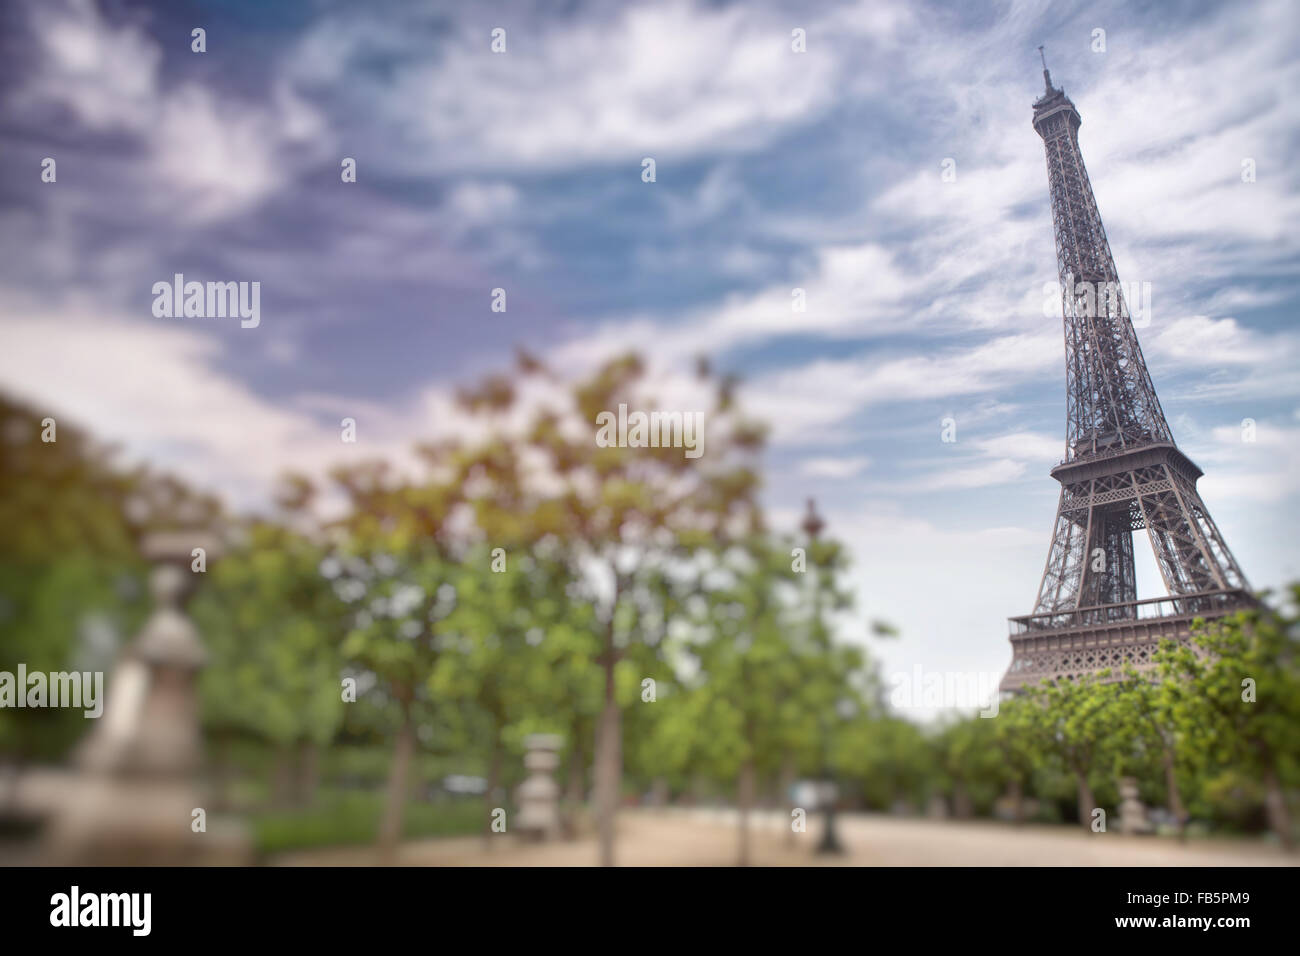 Eiffel tower in Paris, France. Tilt shift photography Stock Photo